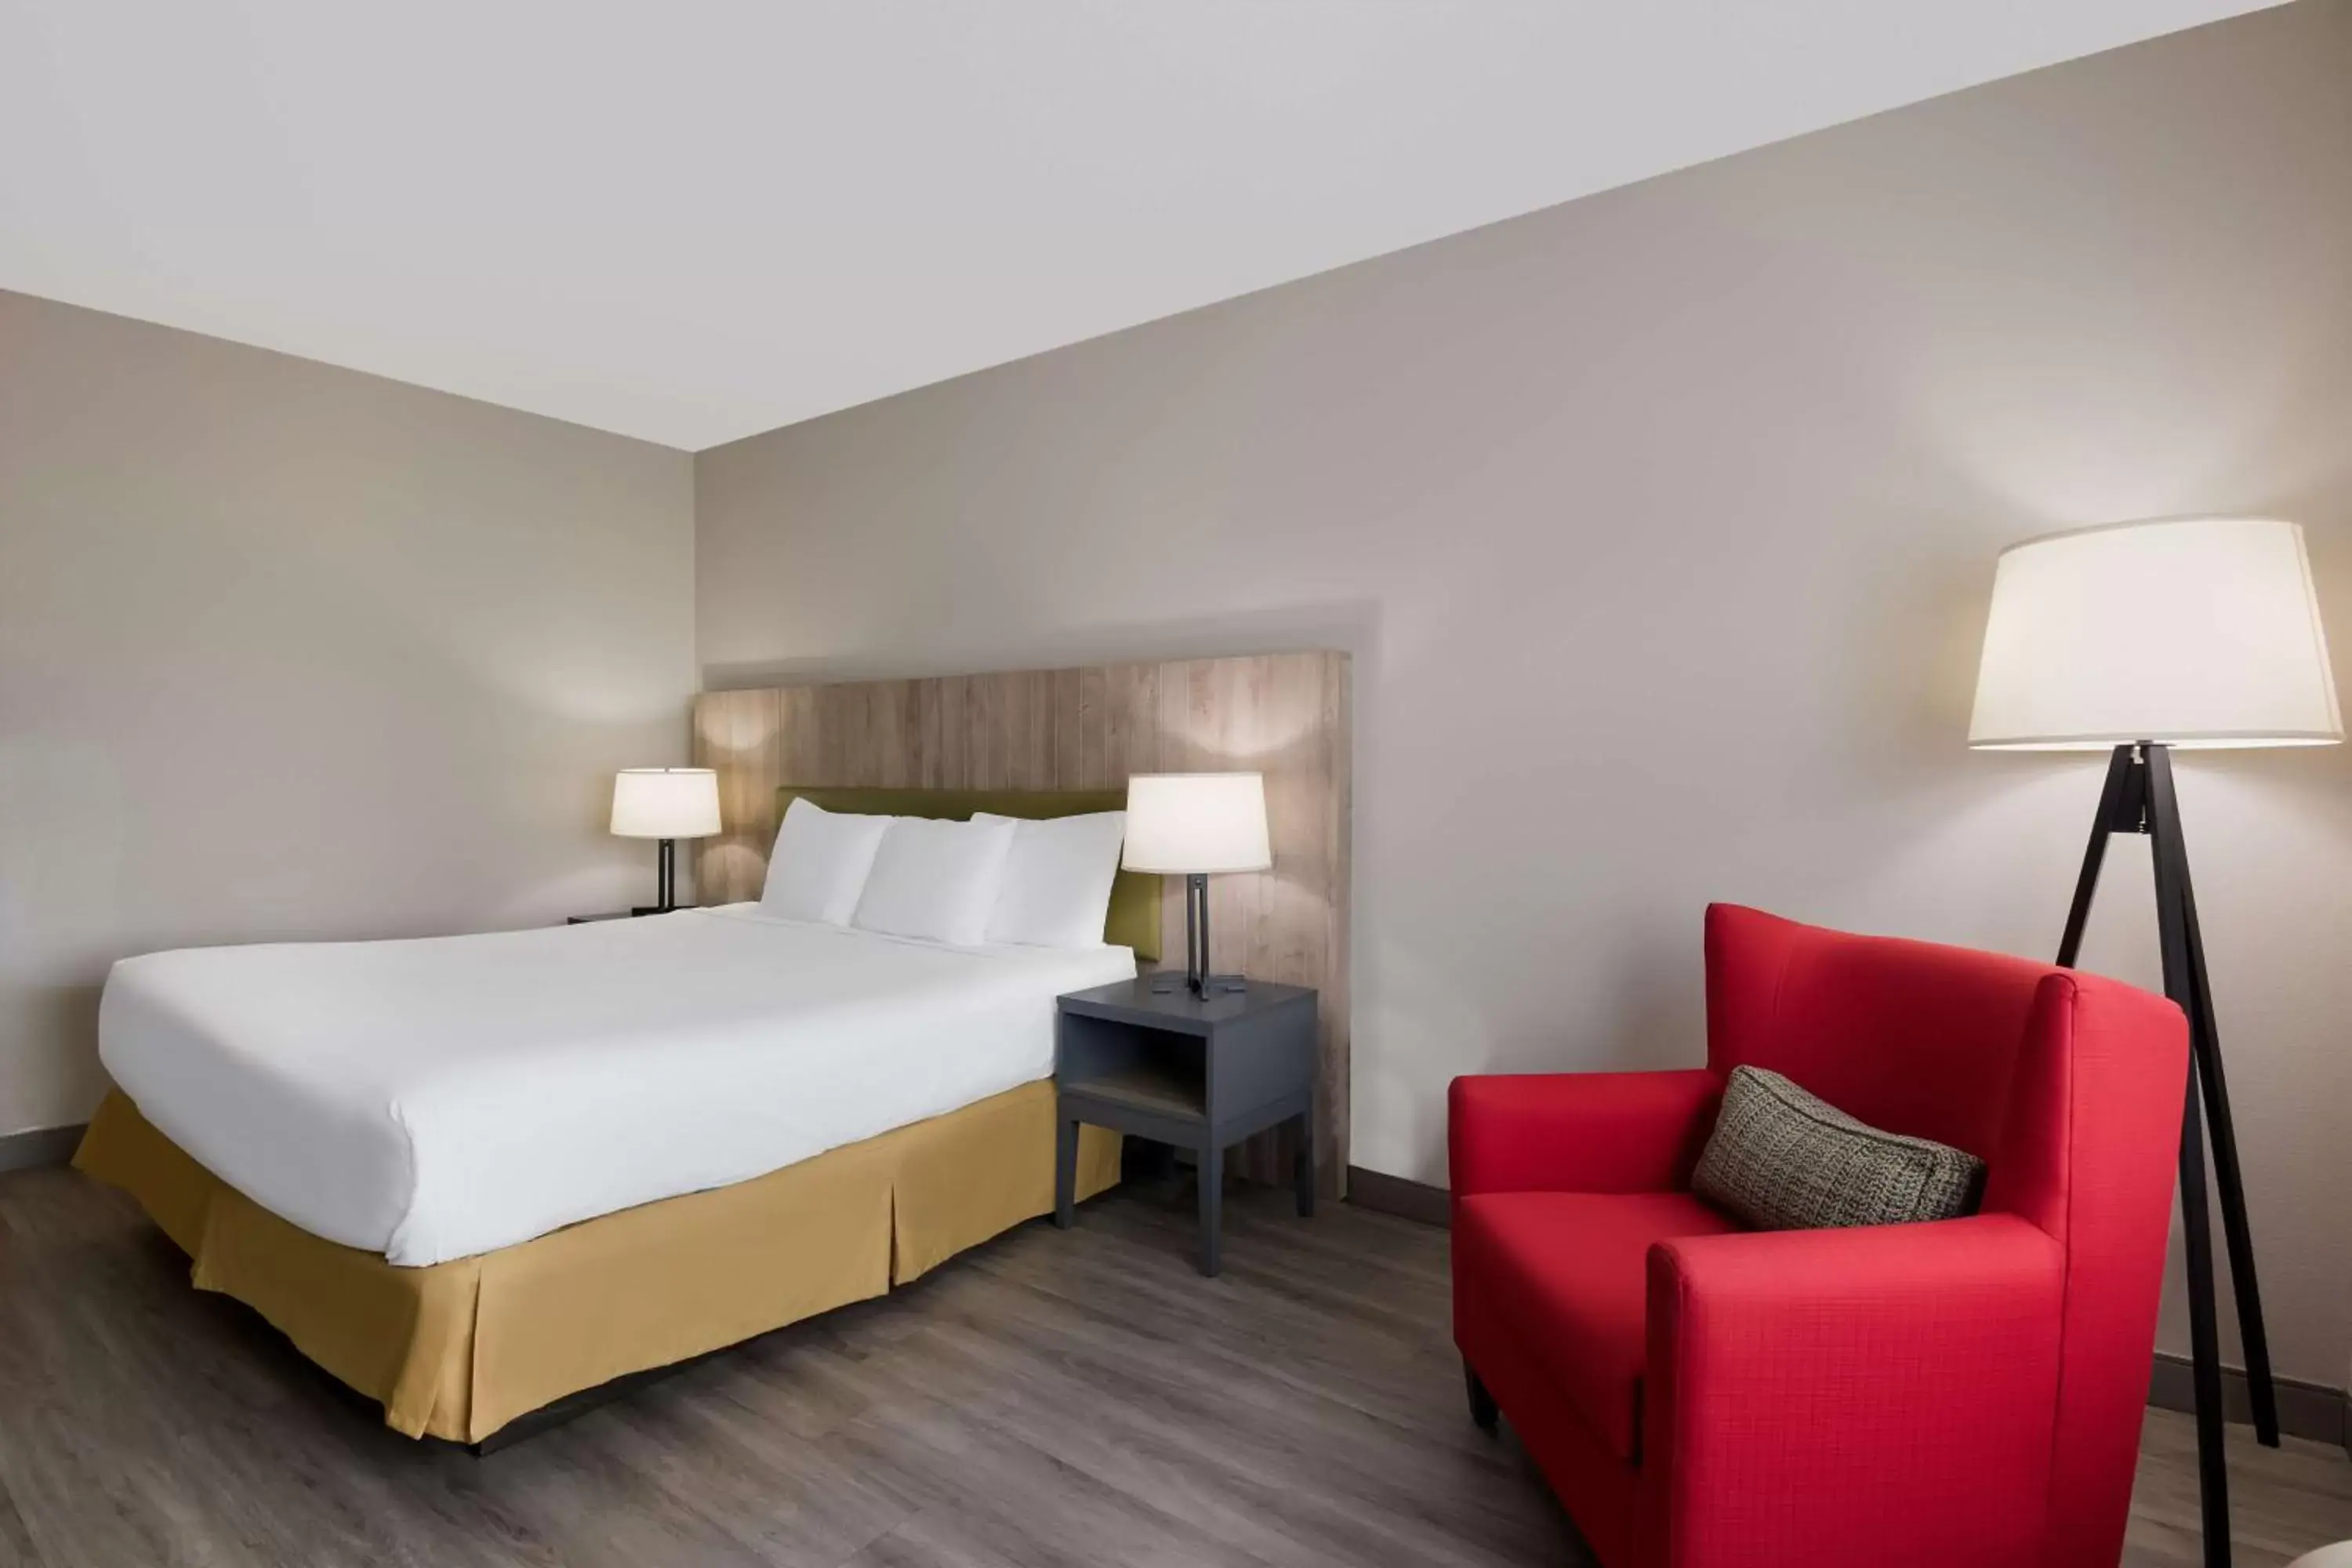 Bedroom in Country Inn & Suites by Radisson, Harrisburg Northeast (Hershey), PA